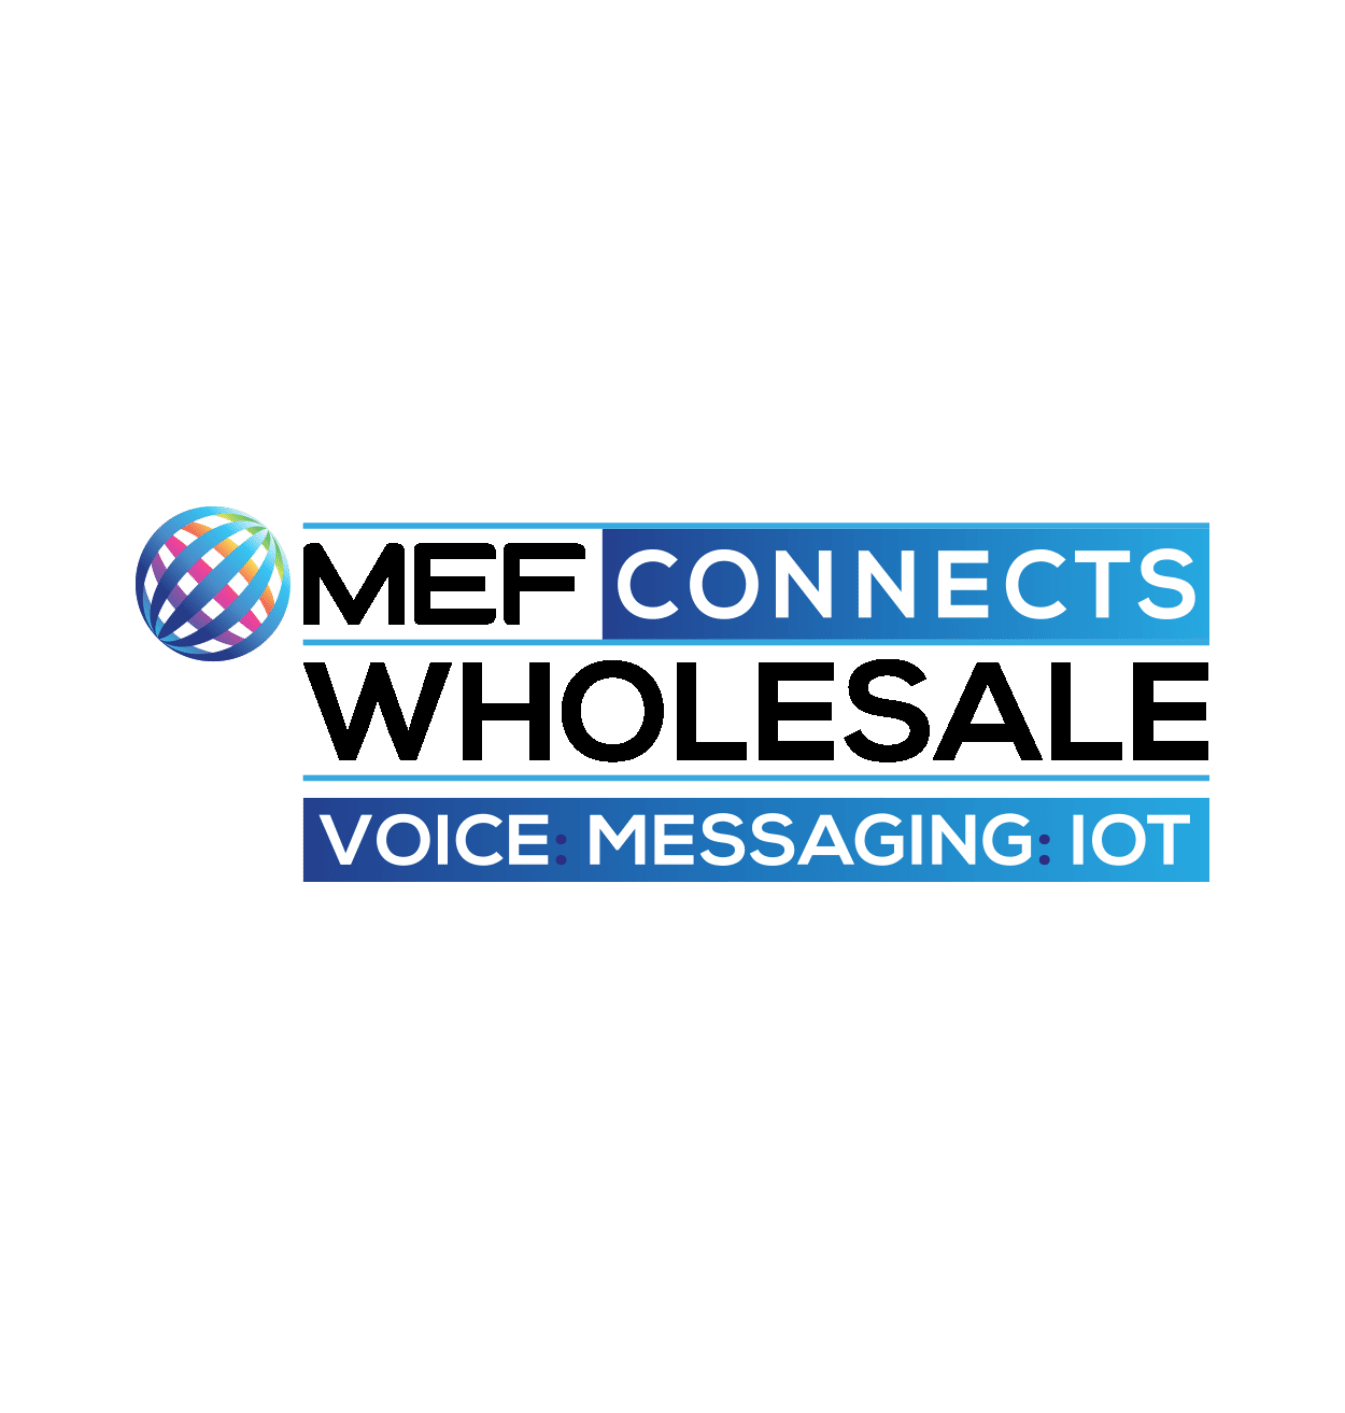 MEF-connects-wholesale-event